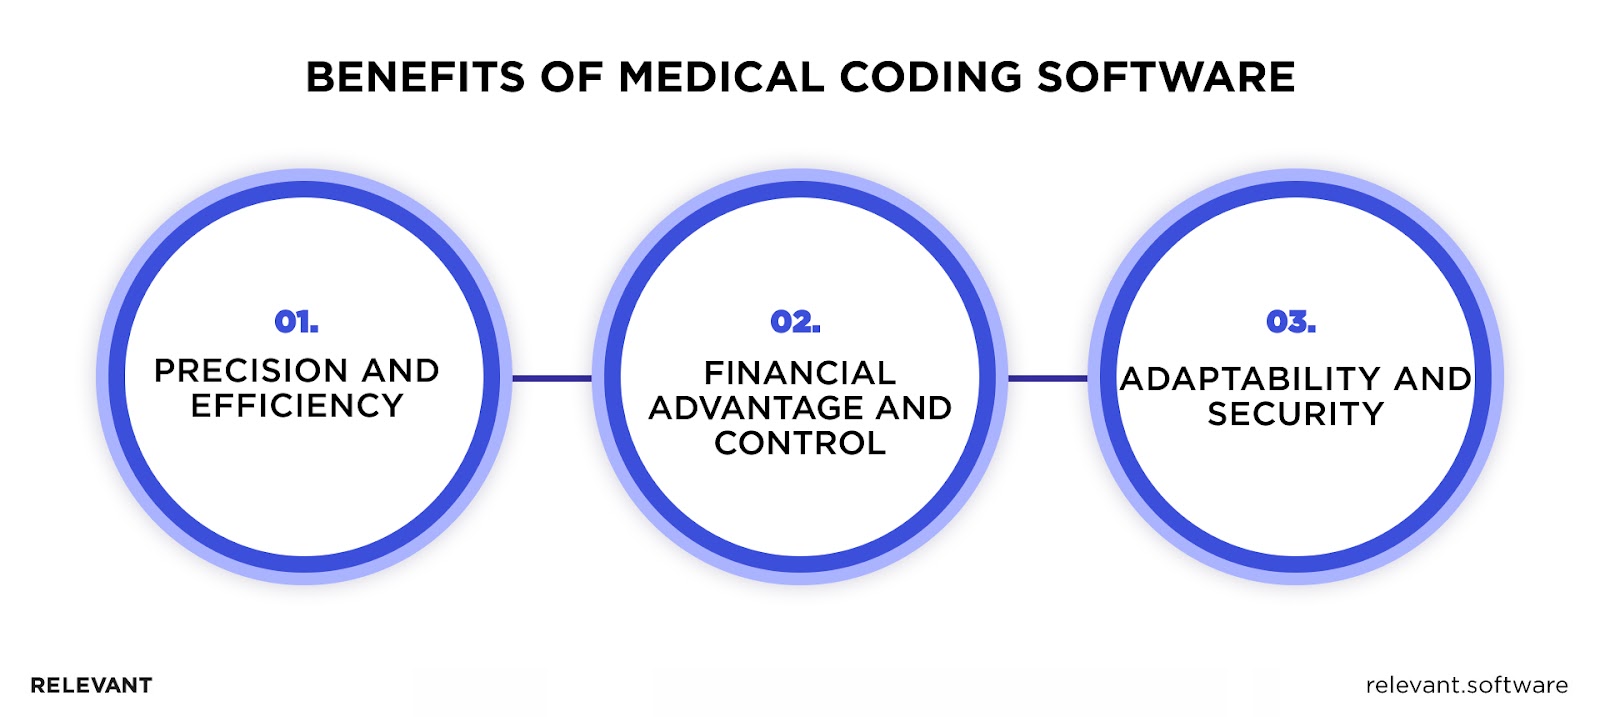 Benefits of Medical Coding Software